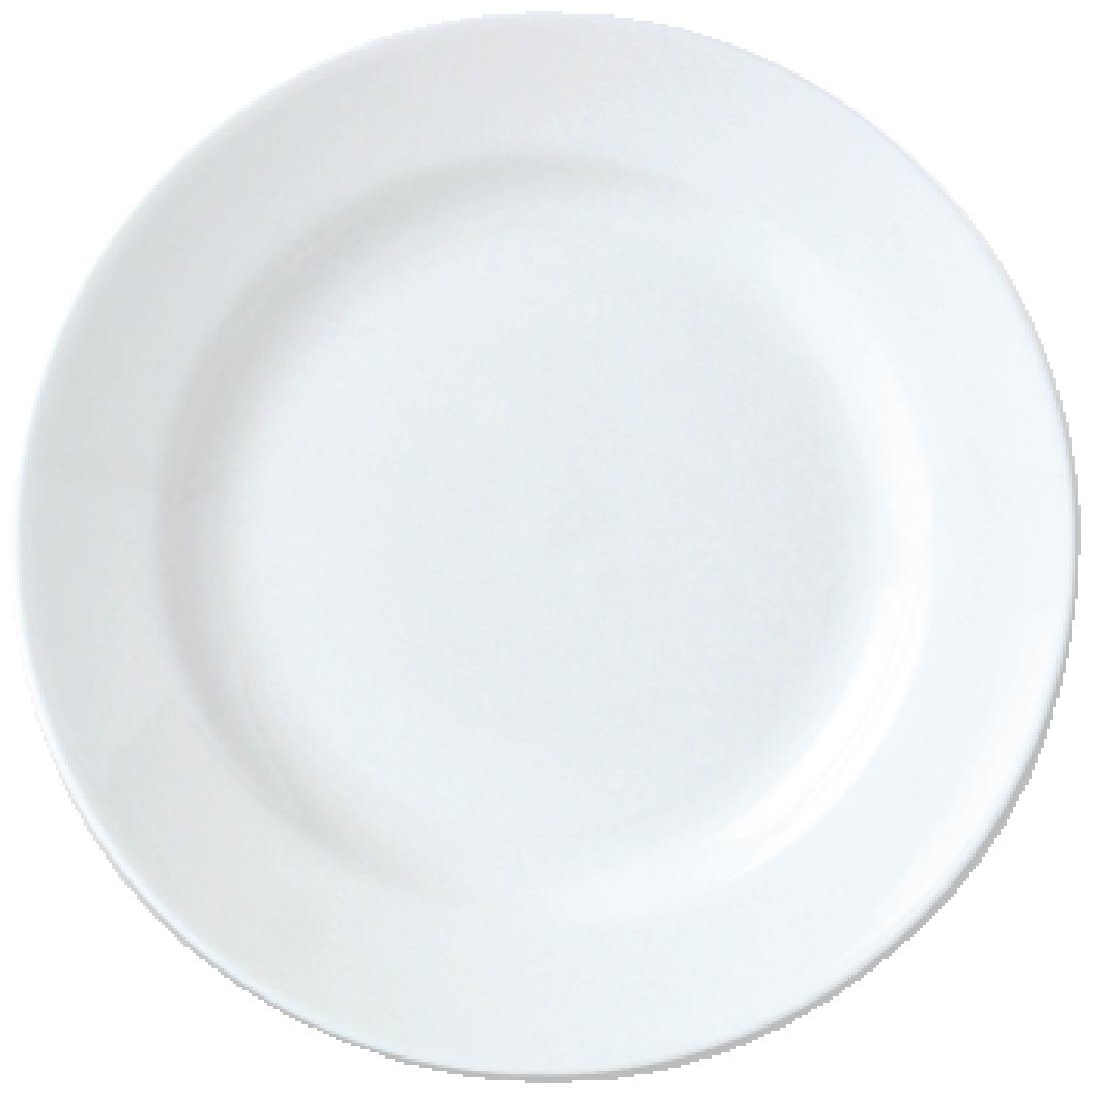 Steelite Simplicity White Harmony Plates 300mm